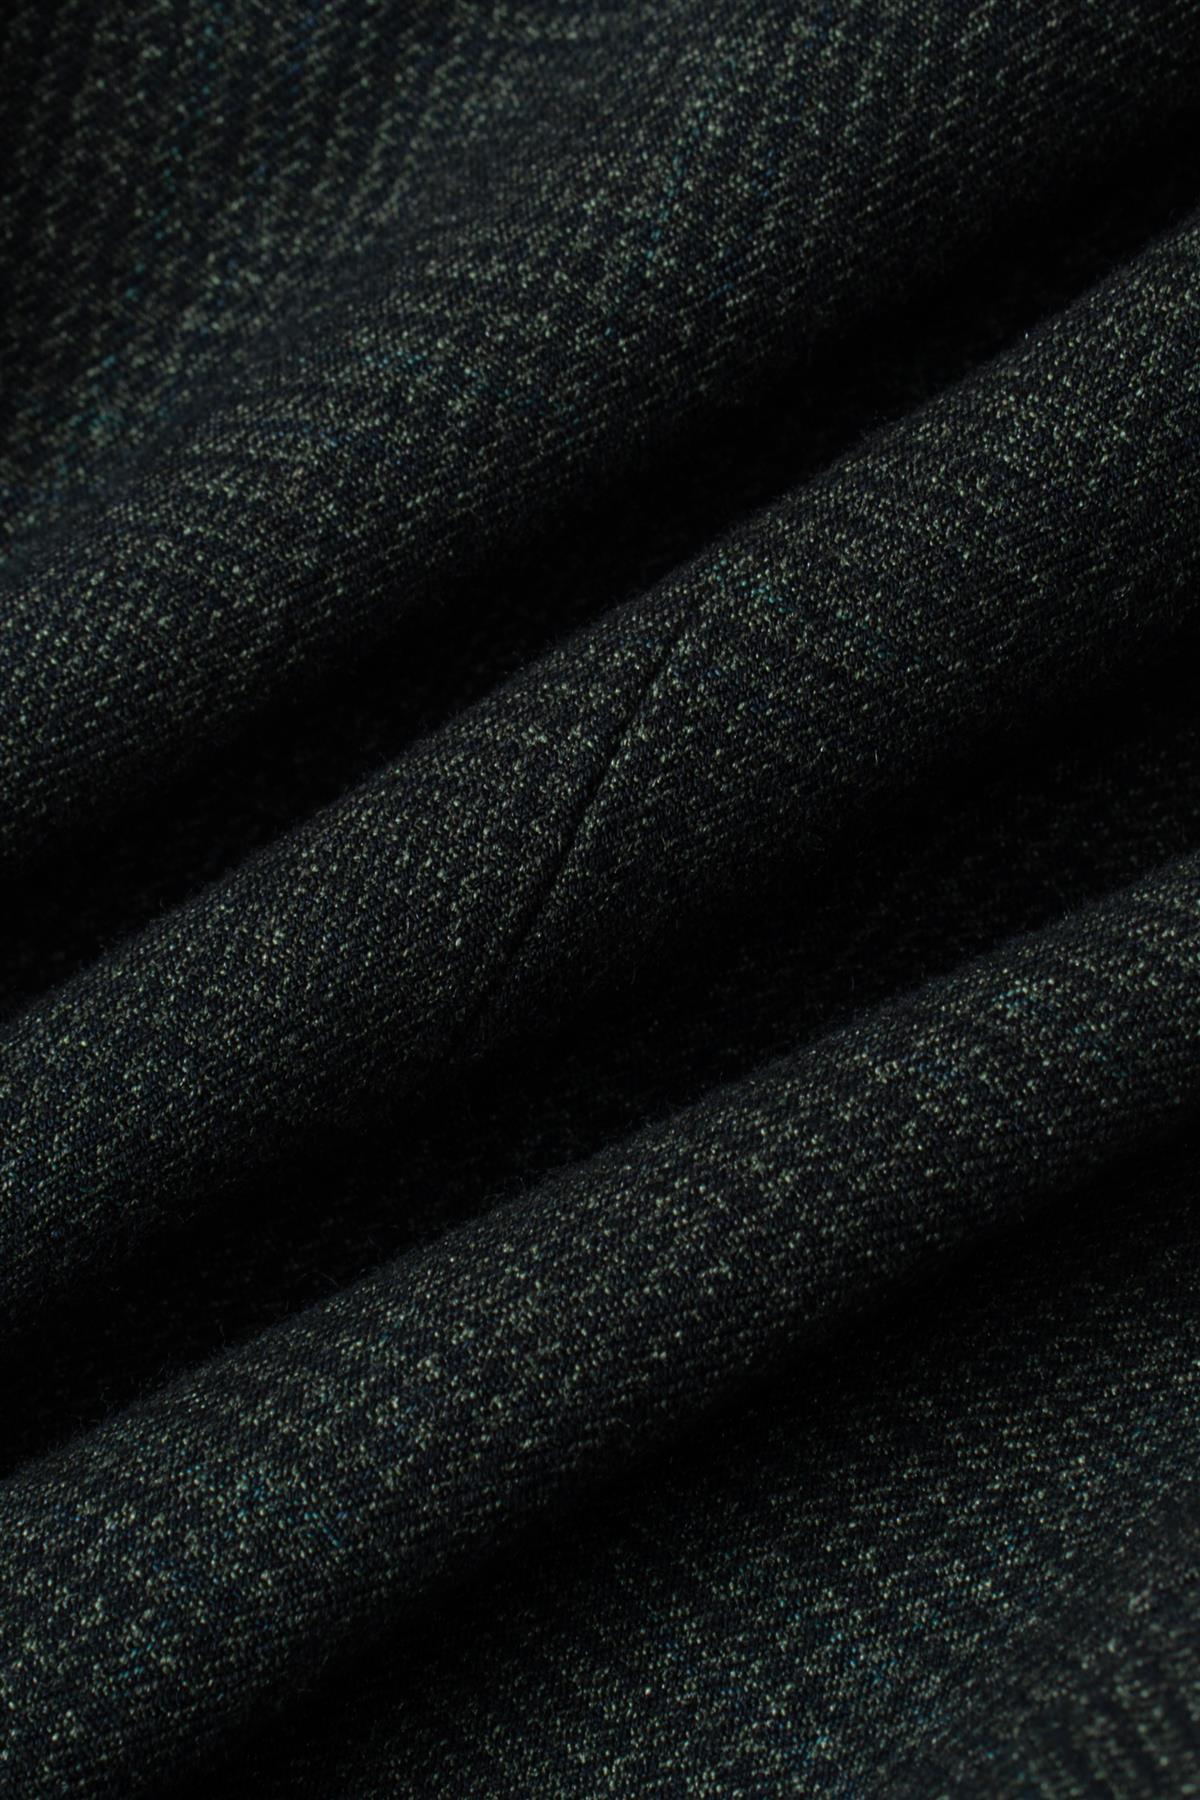 Caridi olive tweed three piece suit fabric swatch